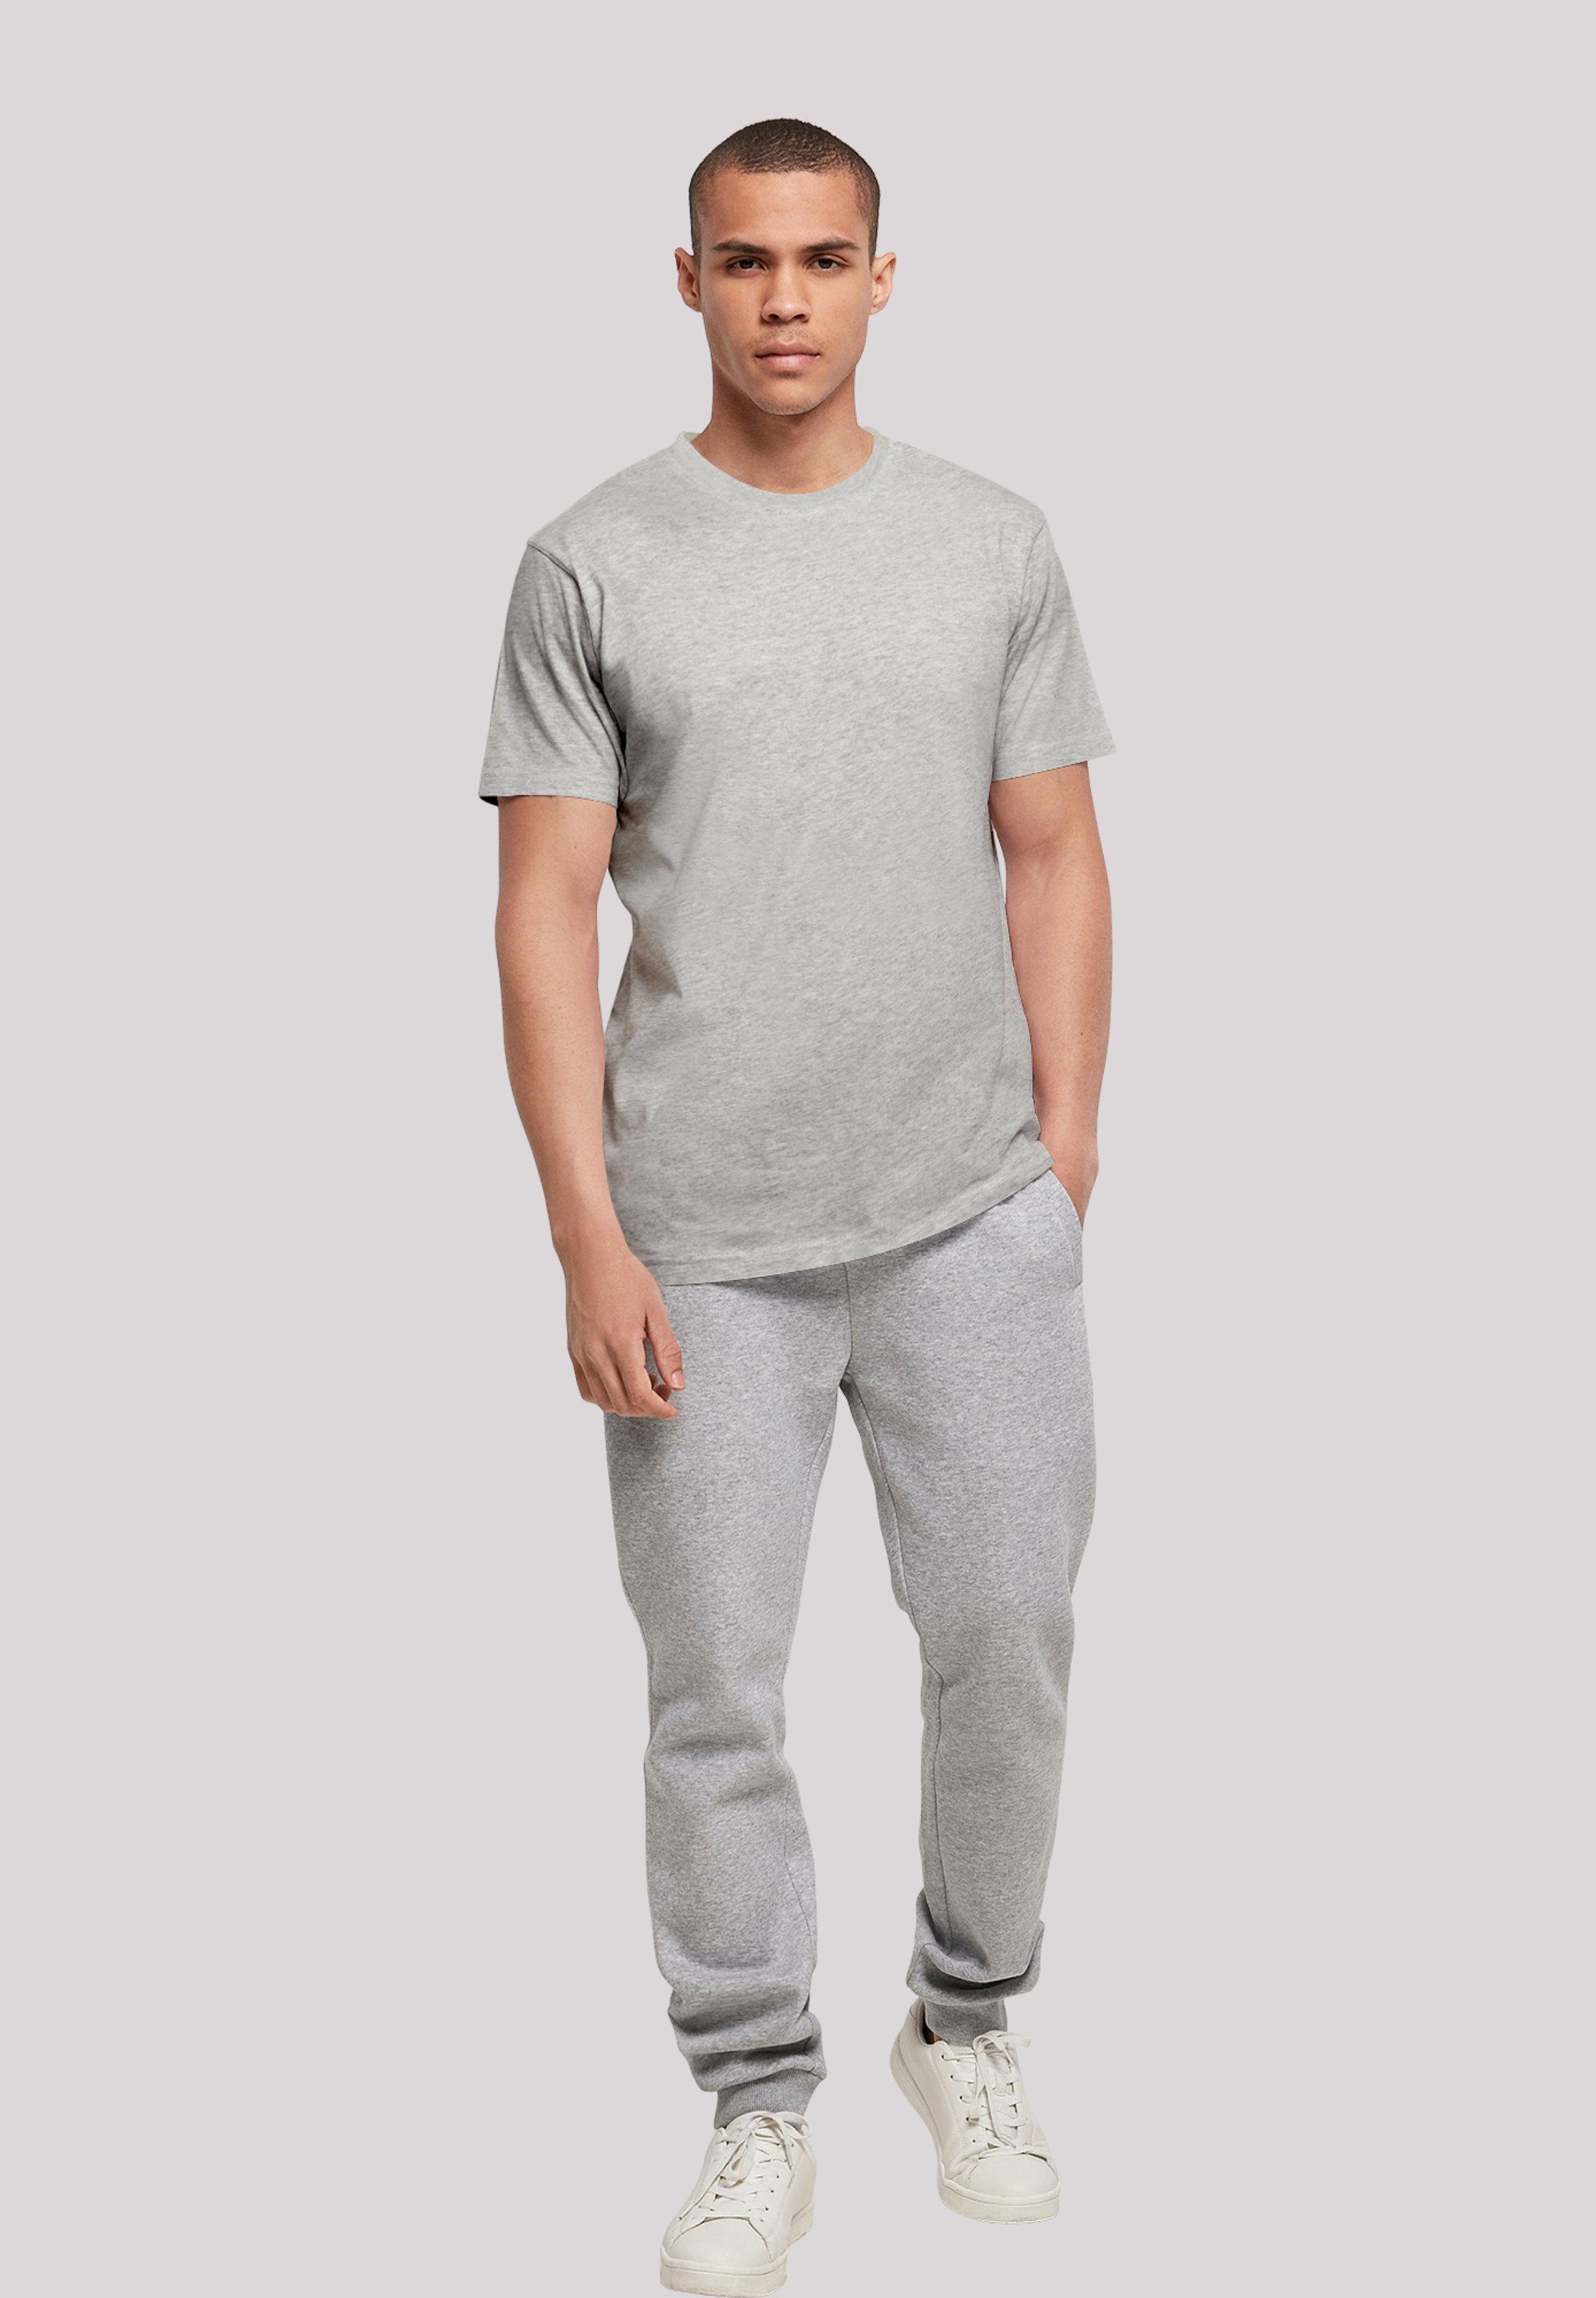 98 UNISEX Brooklyn F4NT4STIC grey T-Shirt NY Print TEE heather